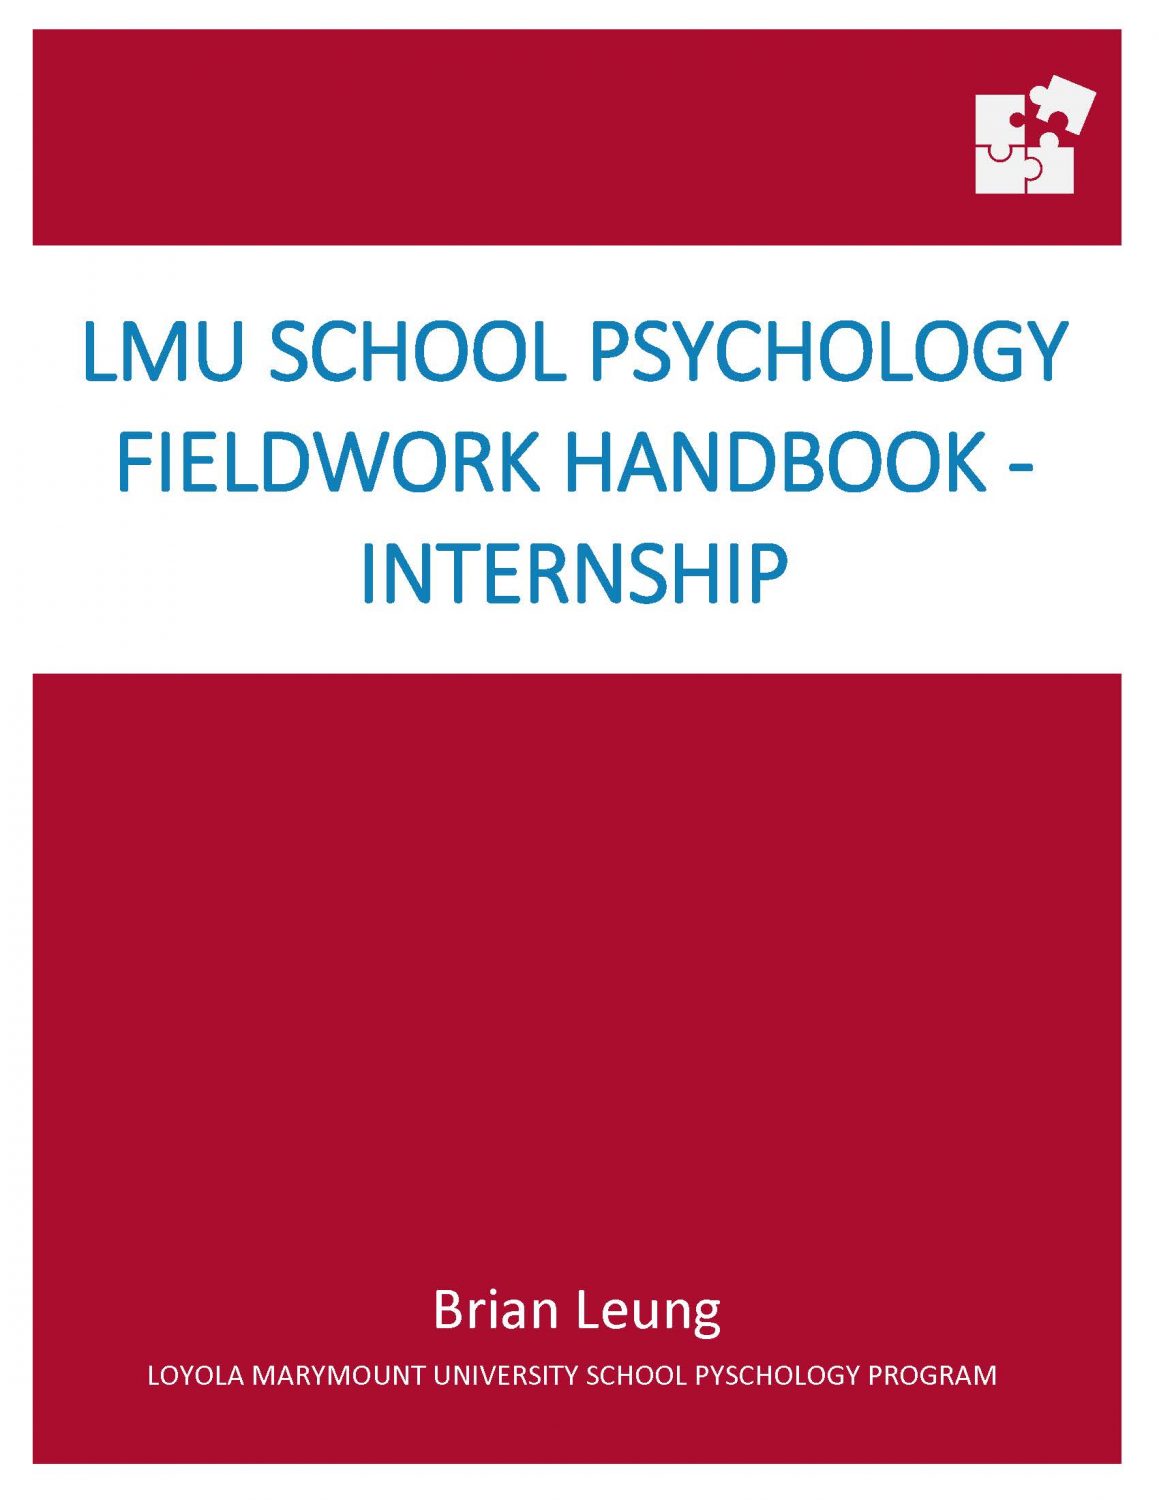 Cover image for Loyola Marymount University School Psychology Fieldwork Handbook 2022 - Internship